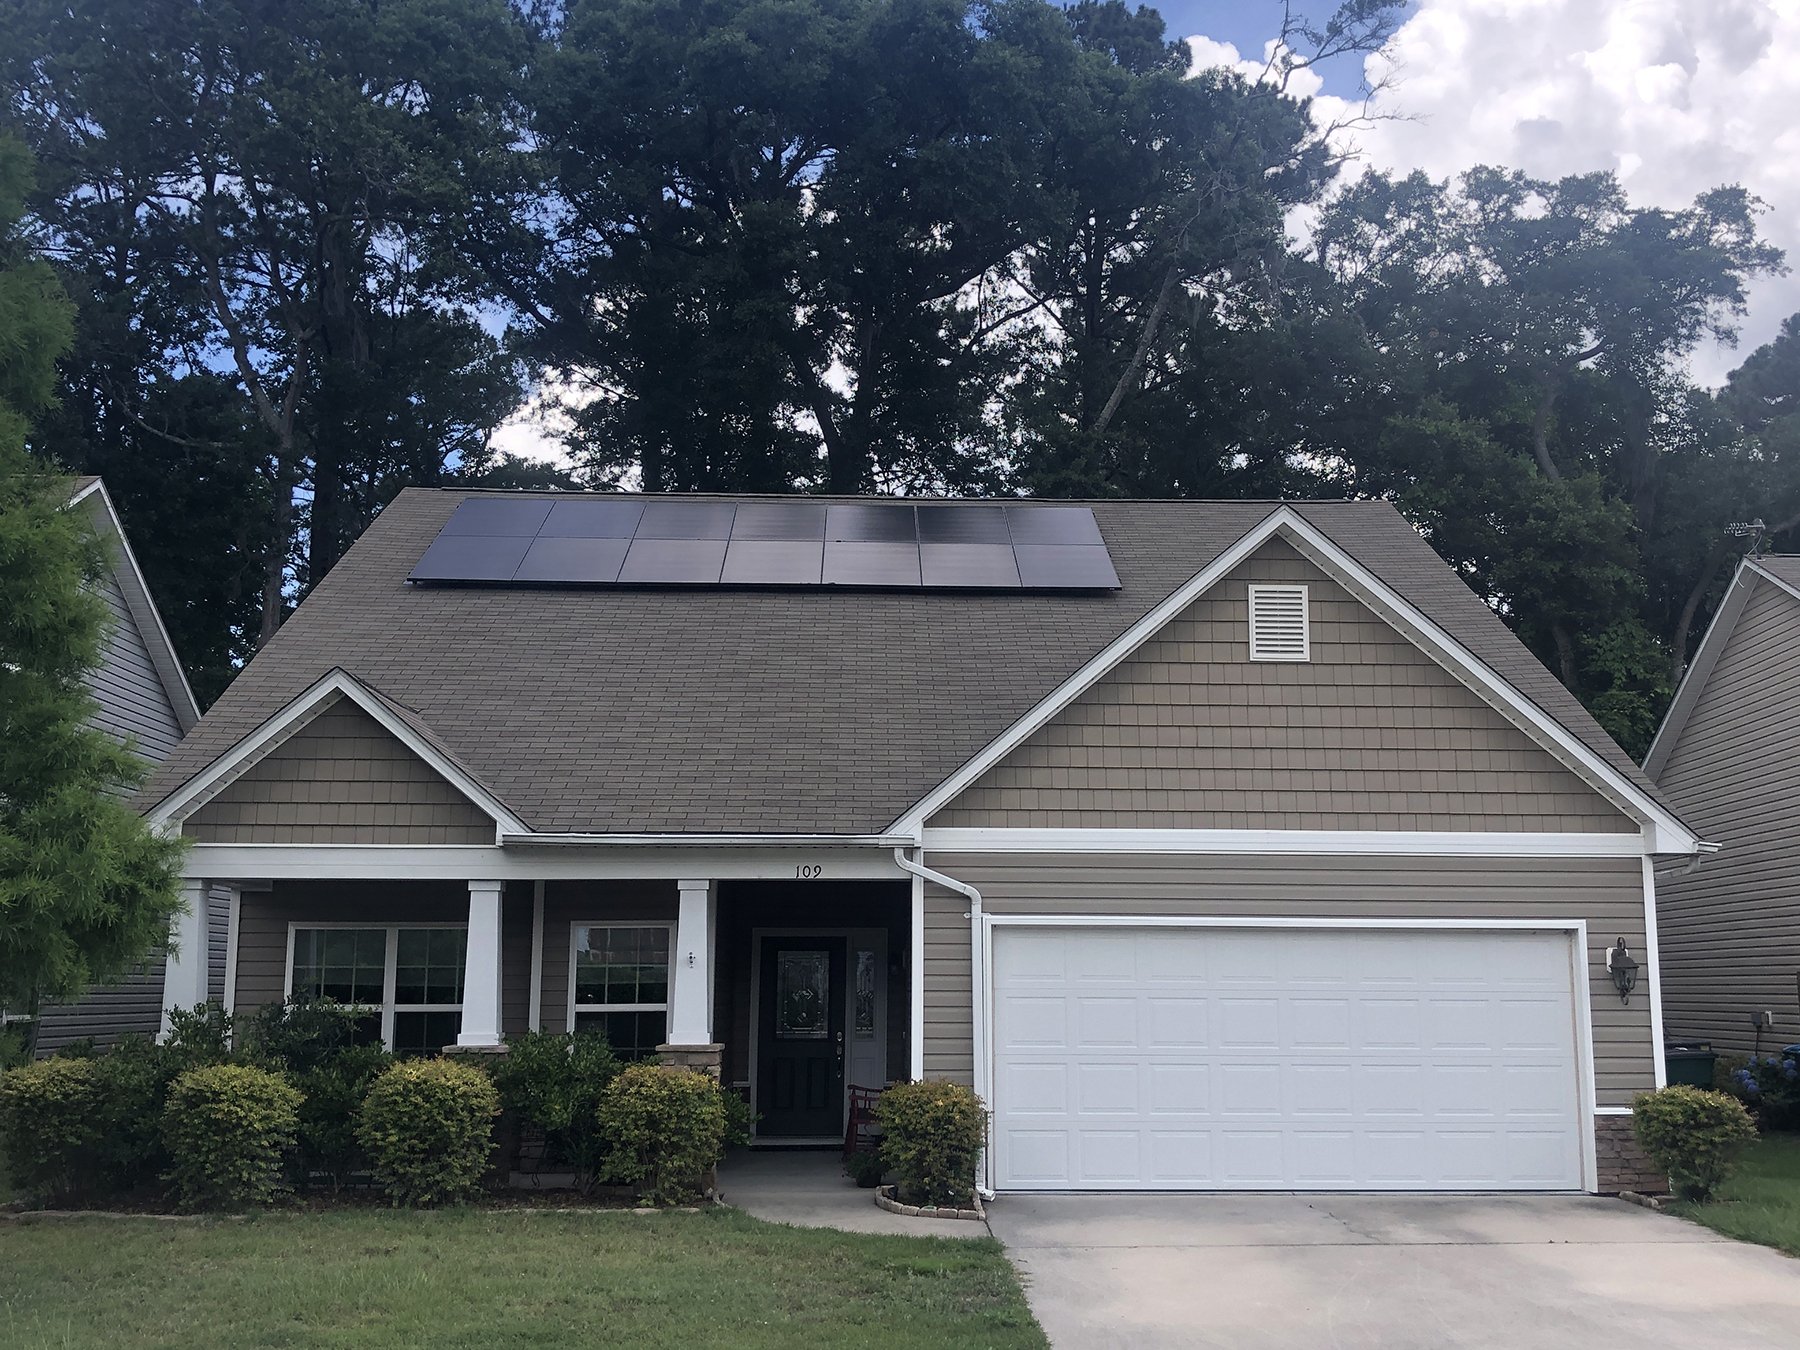 SCSP Solar, South Carolina